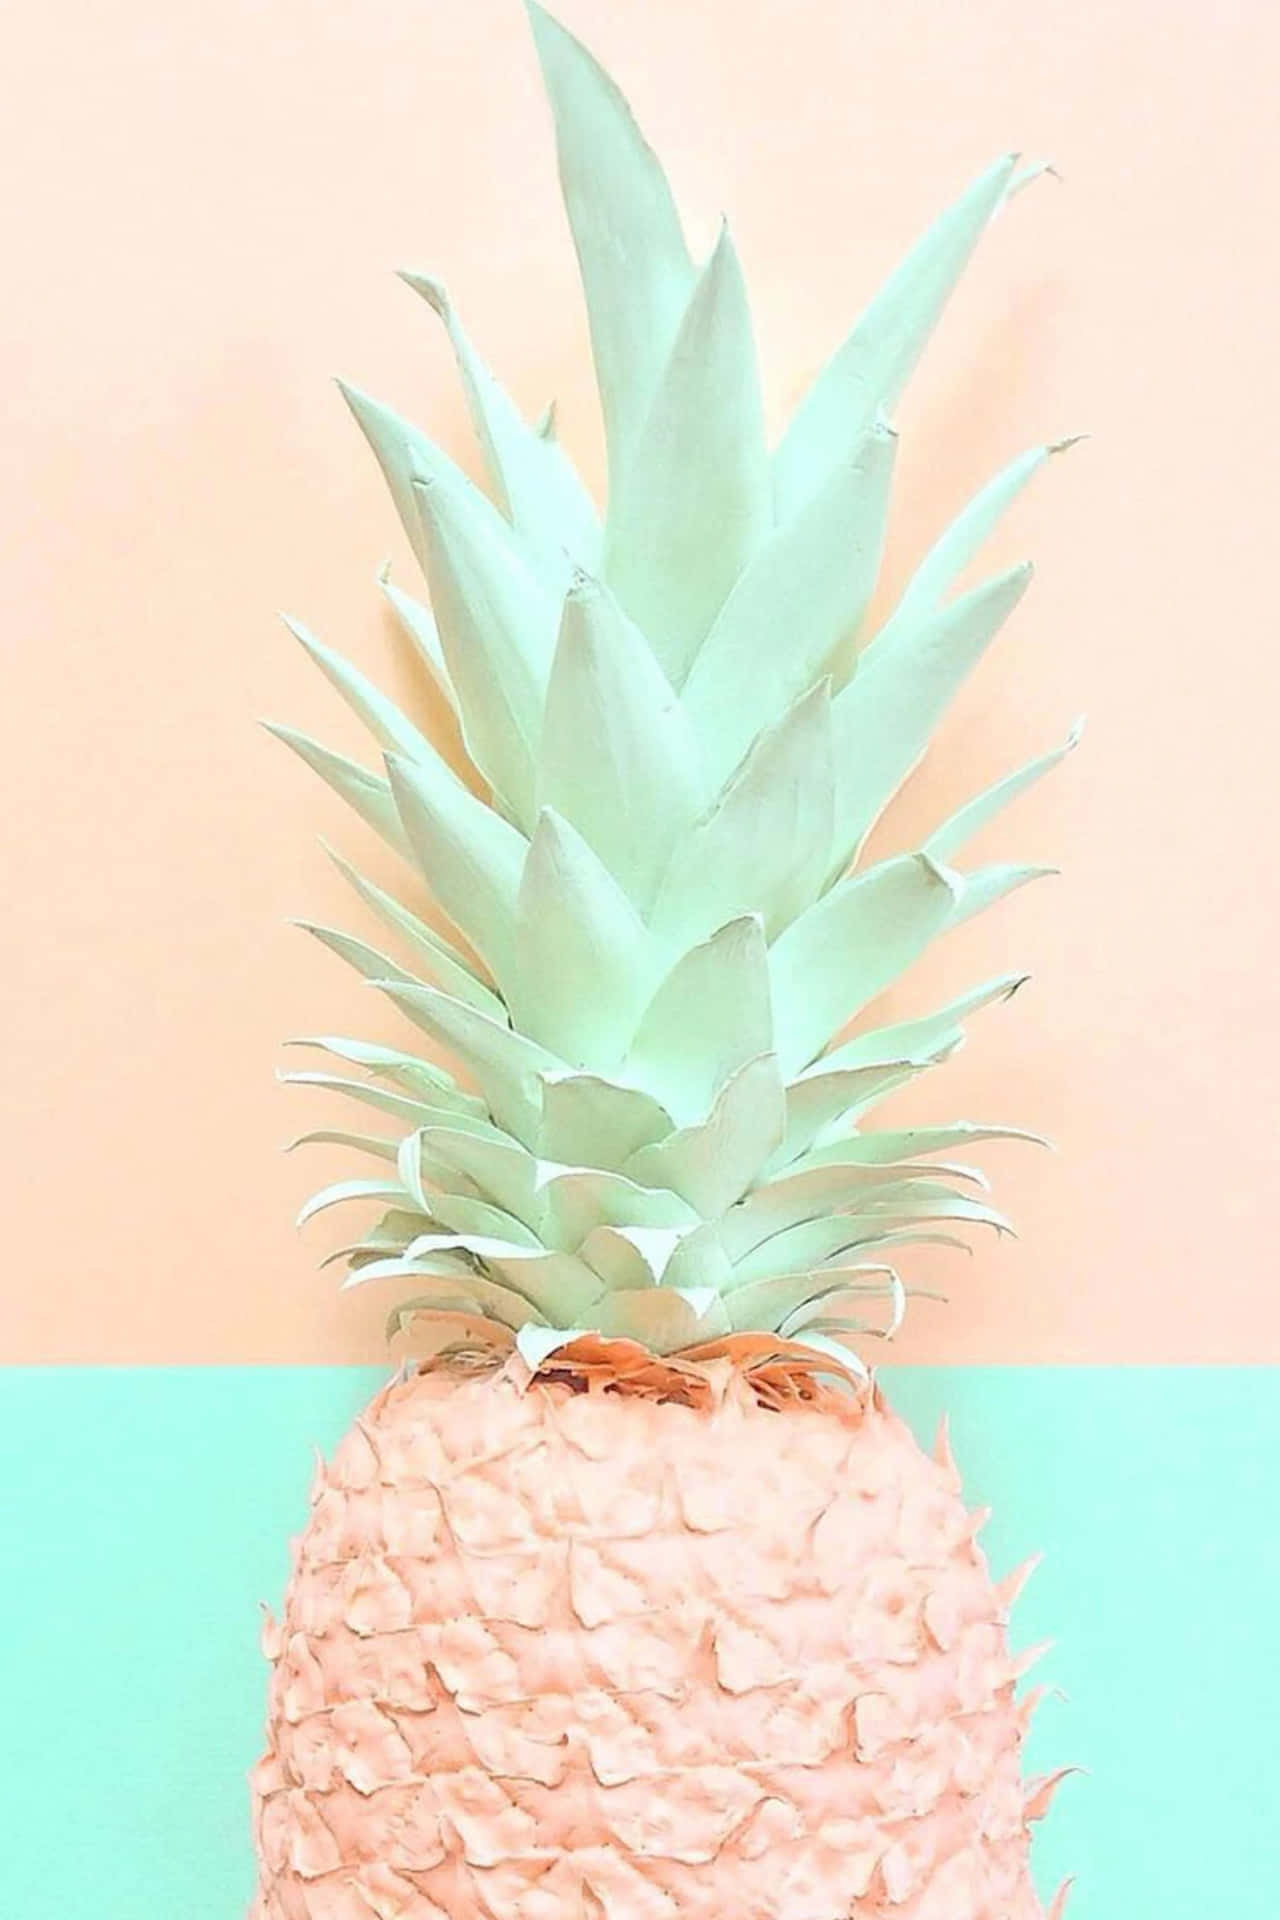 Fresh pineapple is a juicy summer snack